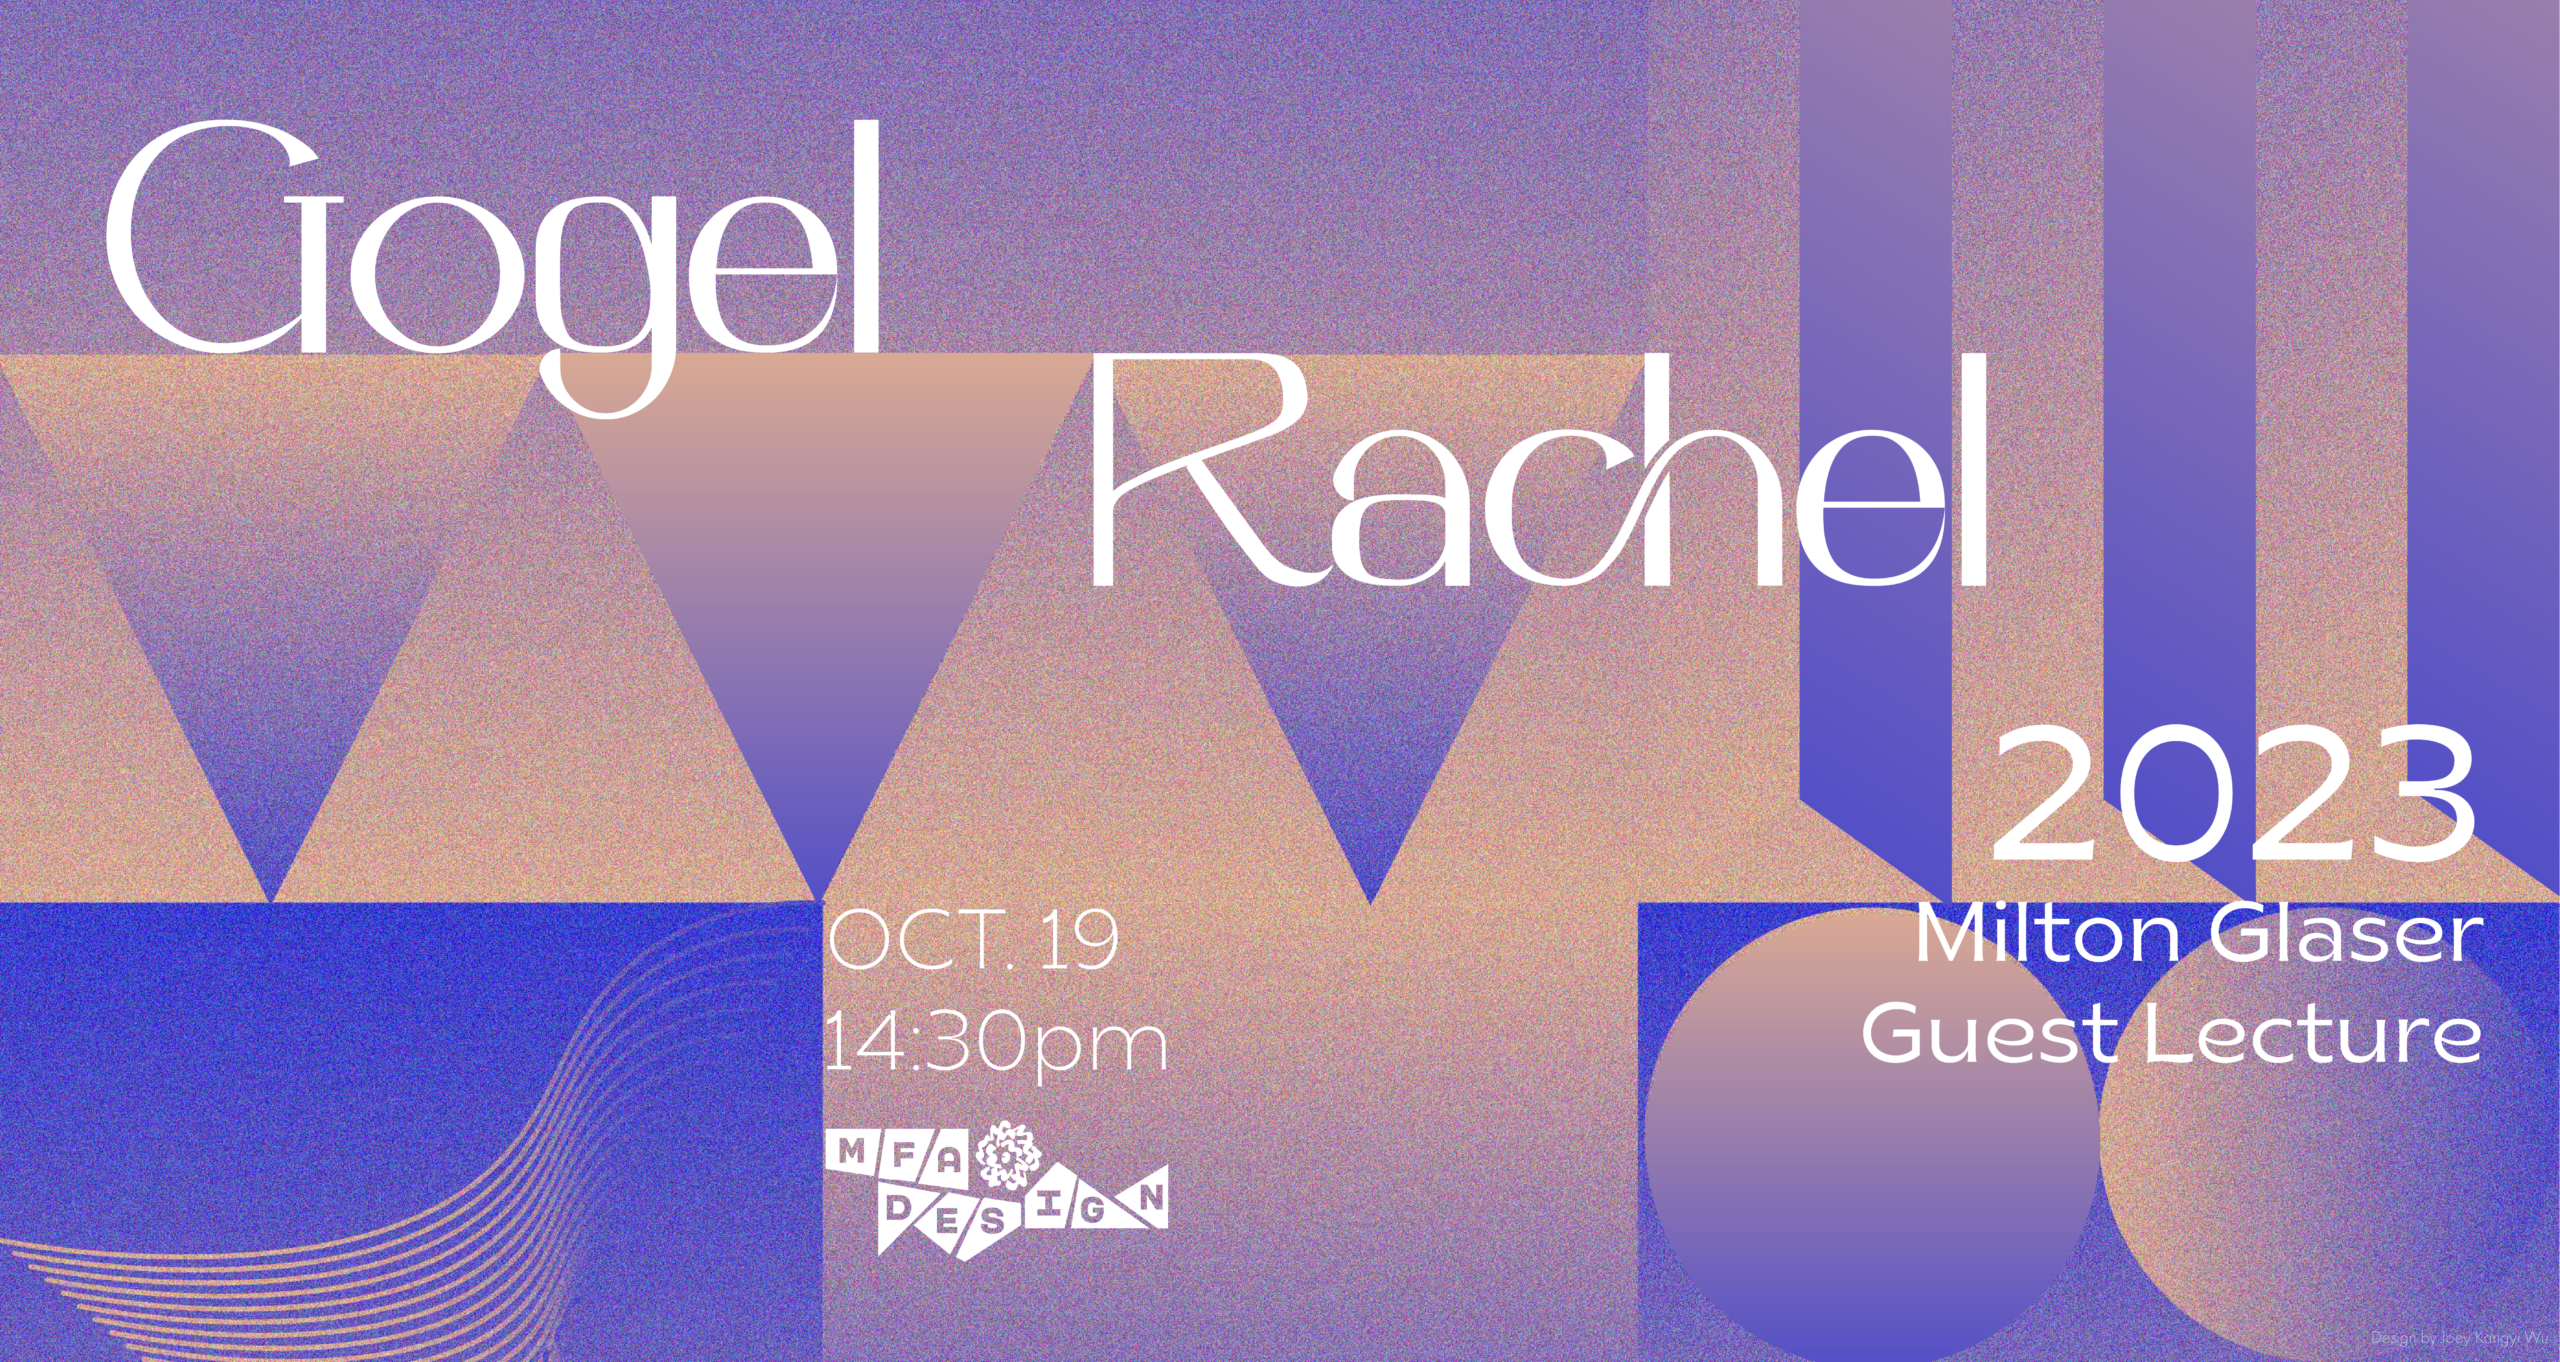 colorful poster announcing guest speaker Rachel Gogel